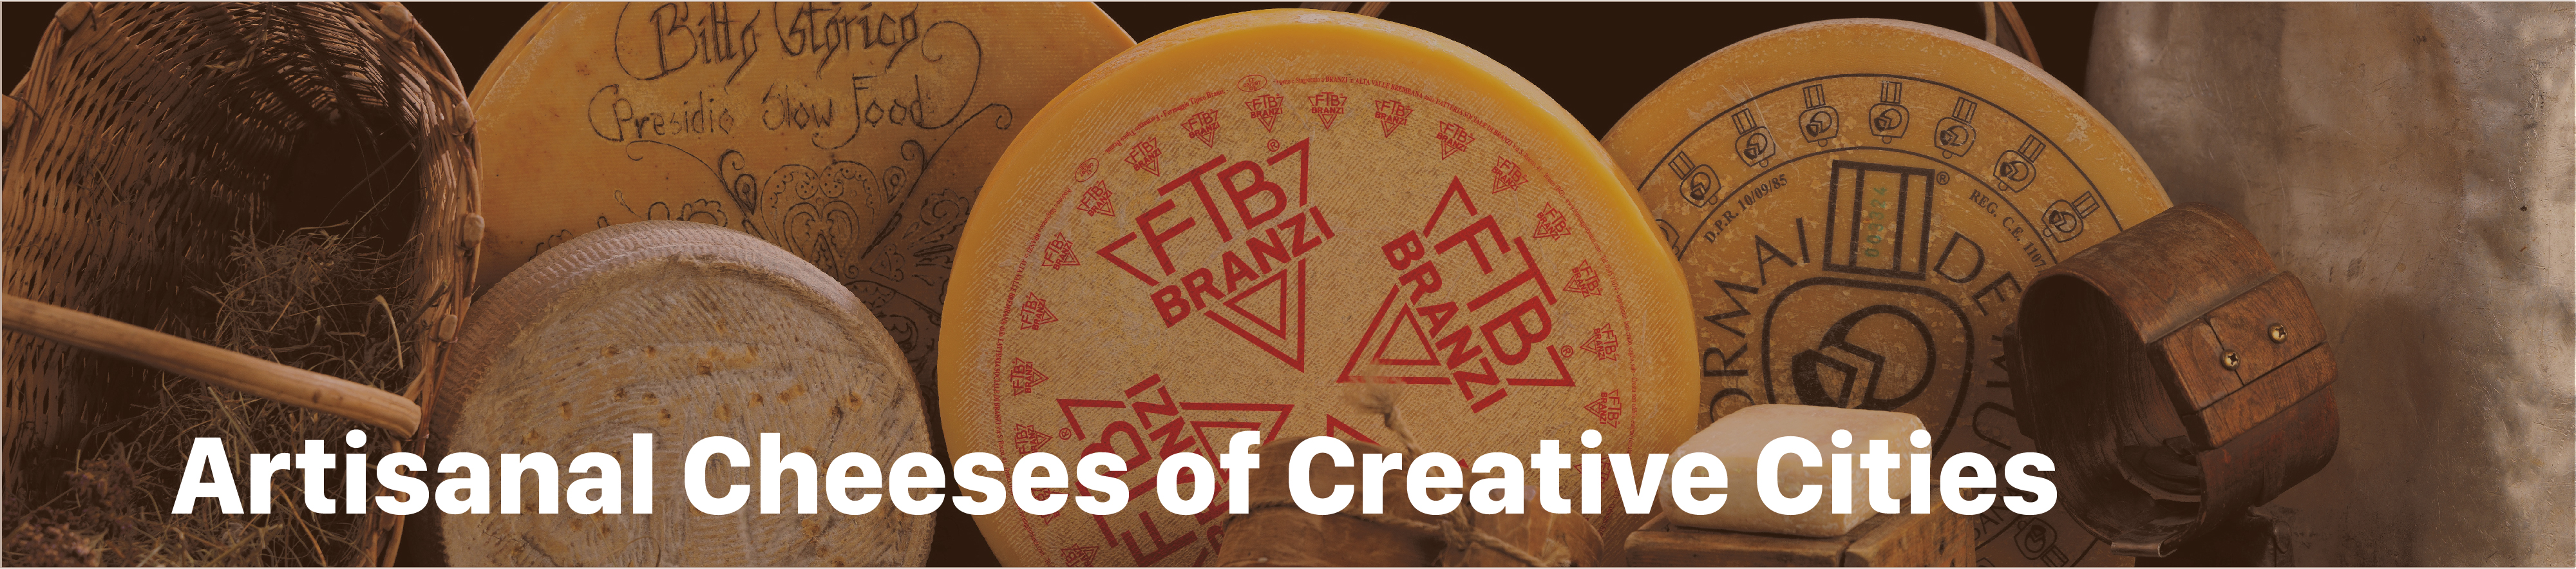 Artisanal Cheeses Of Creative Cities Banner